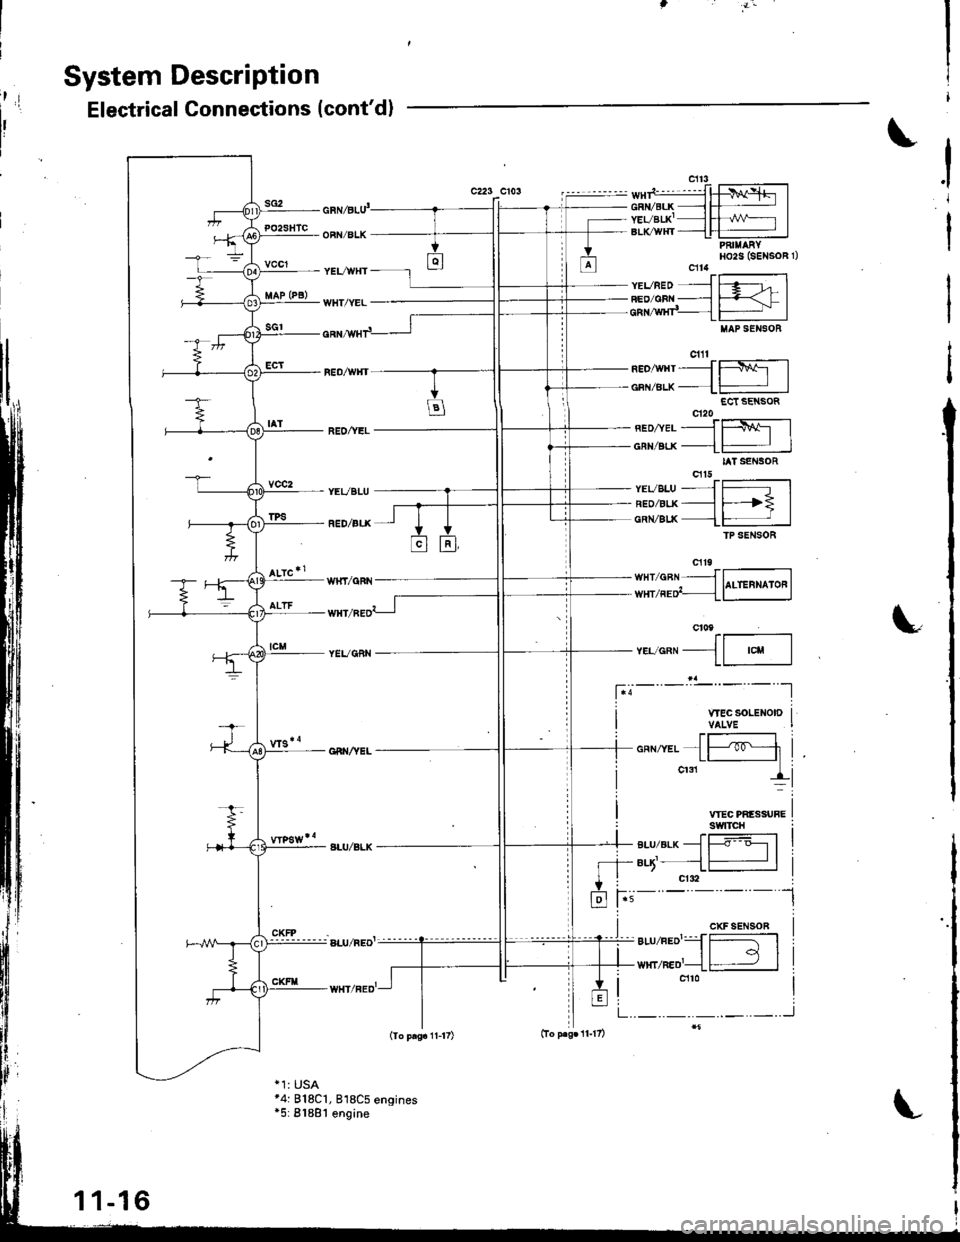 HONDA INTEGRA 1998 4.G User Guide t;
System Description
sG2
Electrical Connections (contd)
c223 CiOSi
I
PO2SHTC
vccl
vcc2
cnl6lu
OFN/BLK
YEVWHT
WHT/YEL
REO/YEL
YEVBLU
RED/ALX
WHI/qFN
TPS
neo,wrtrJffil
oFN/Btx--1-:JECt SE SOR
neonerJ